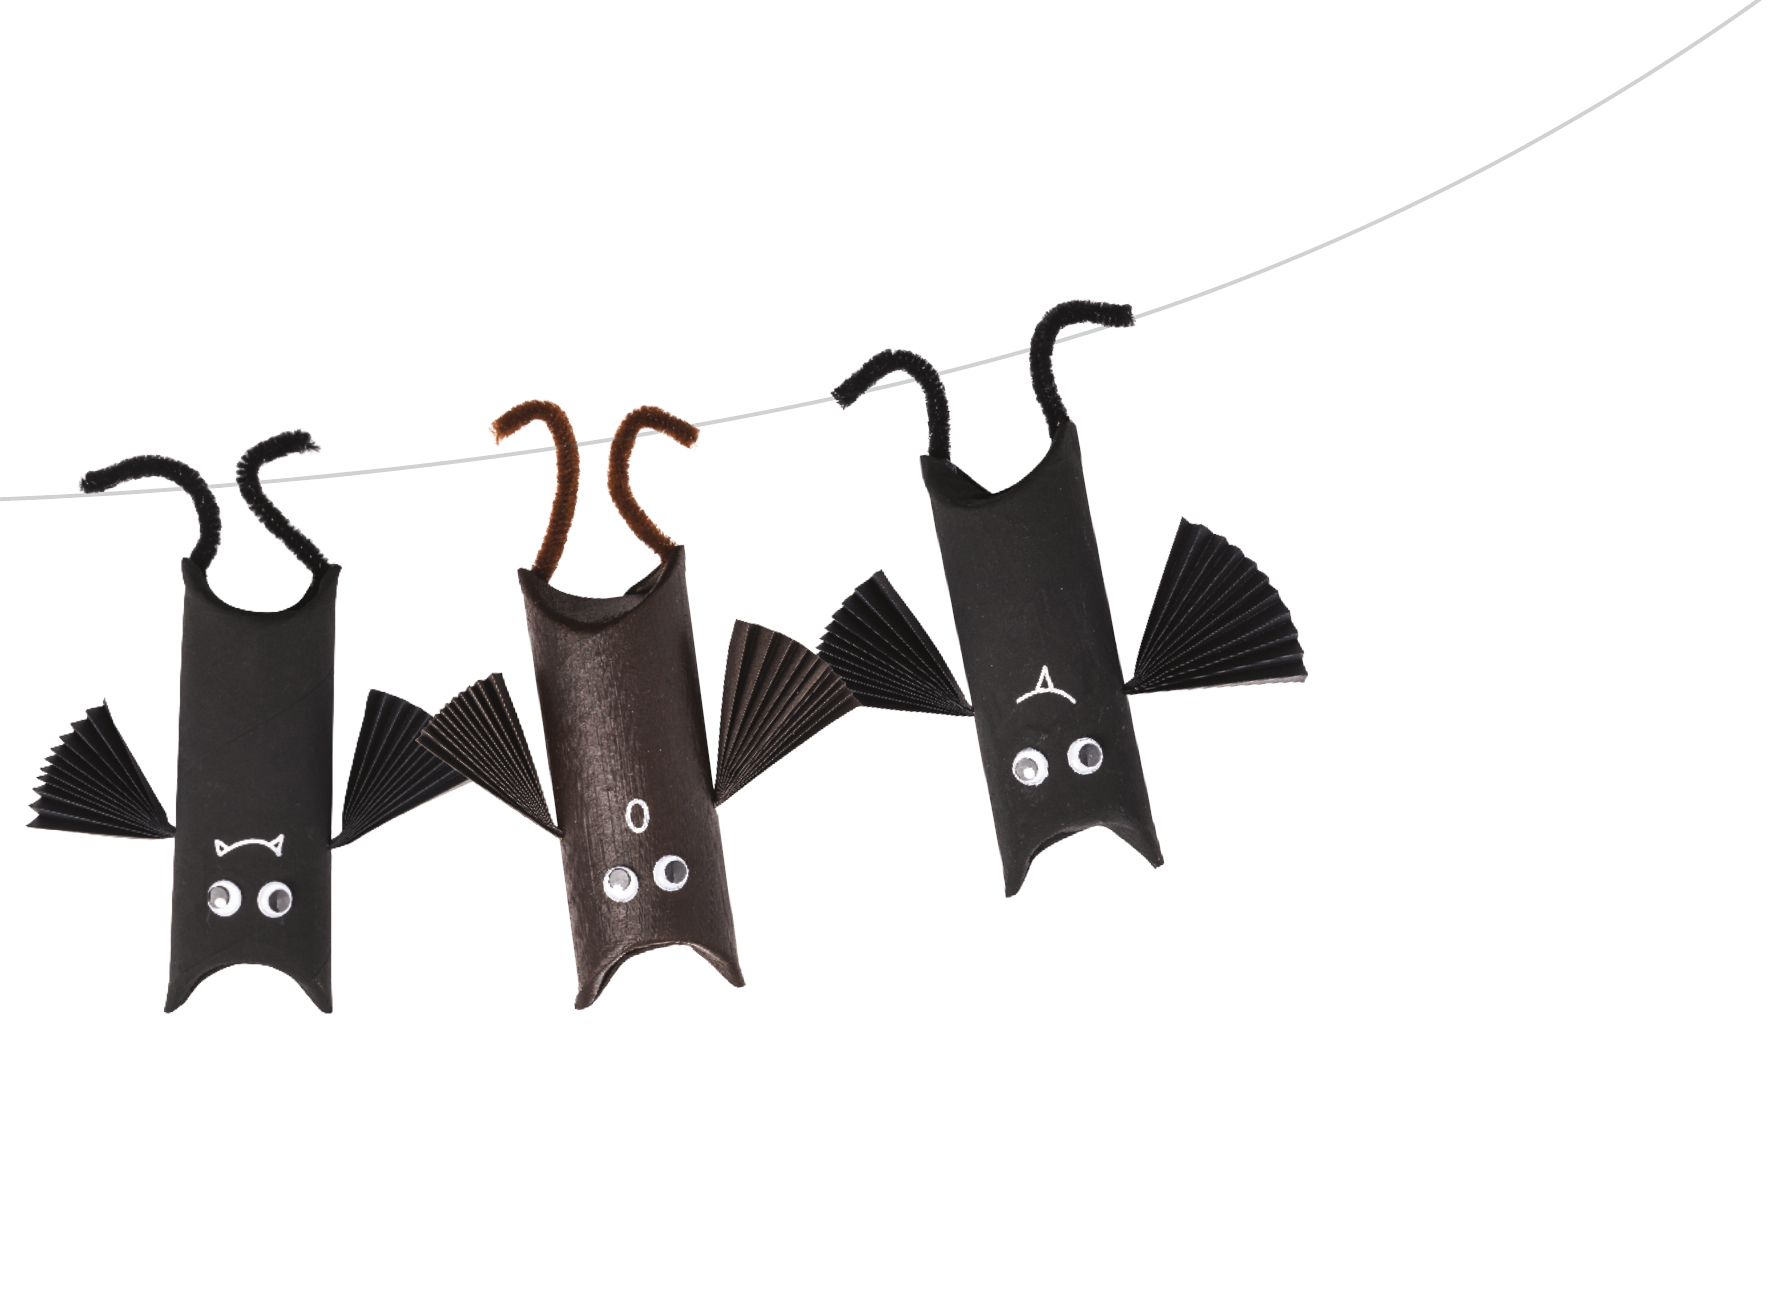 Haunted house papercraft – toilet roll crafts – halloween bats